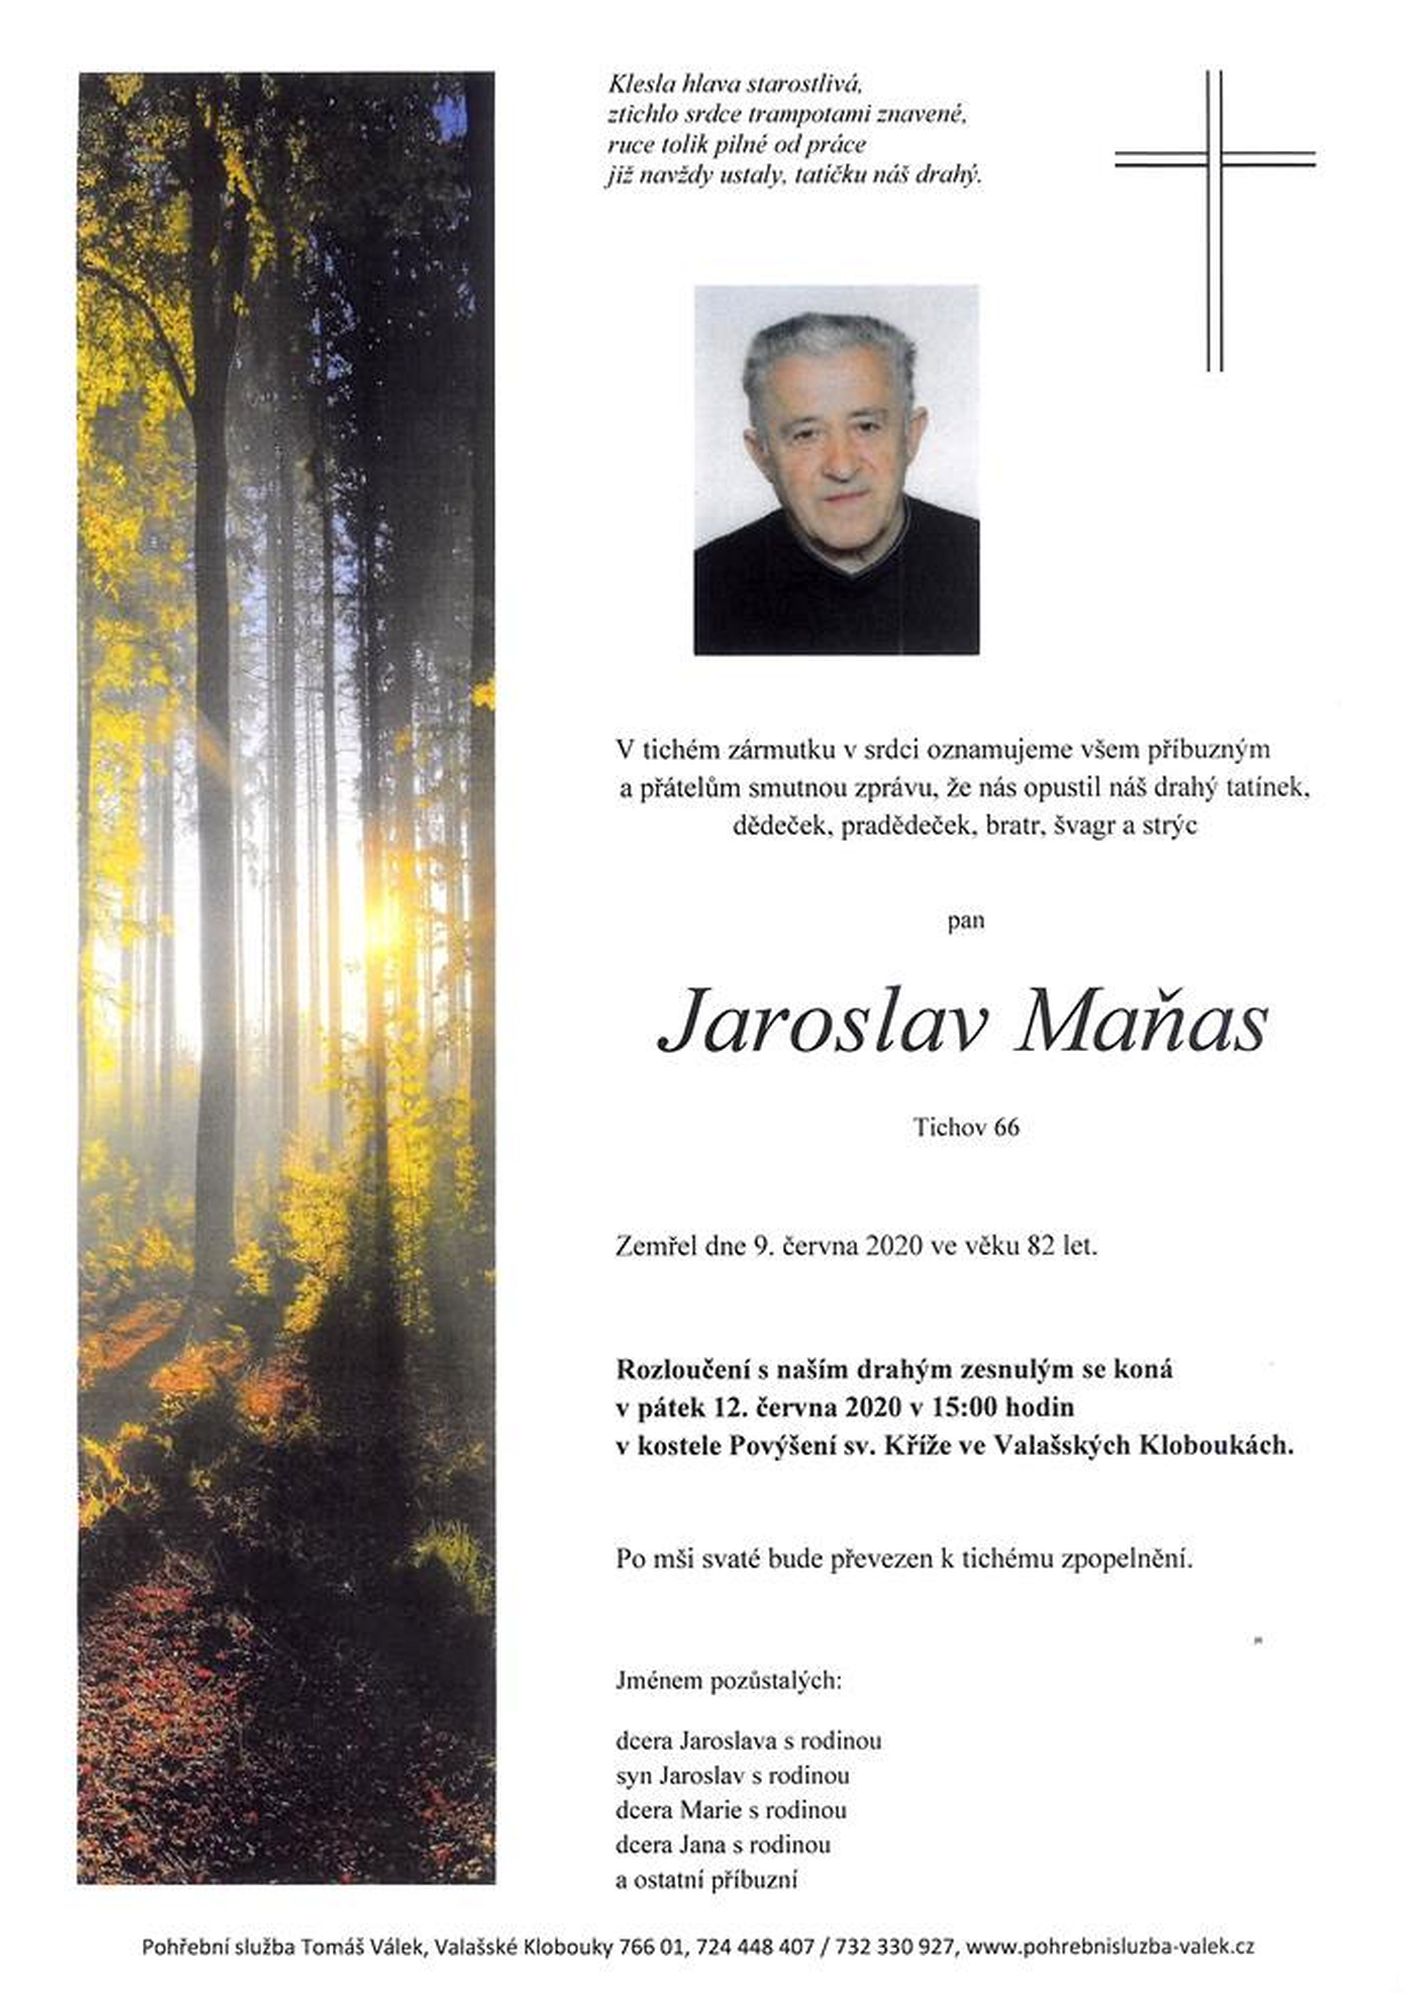 Jaroslav Maňas